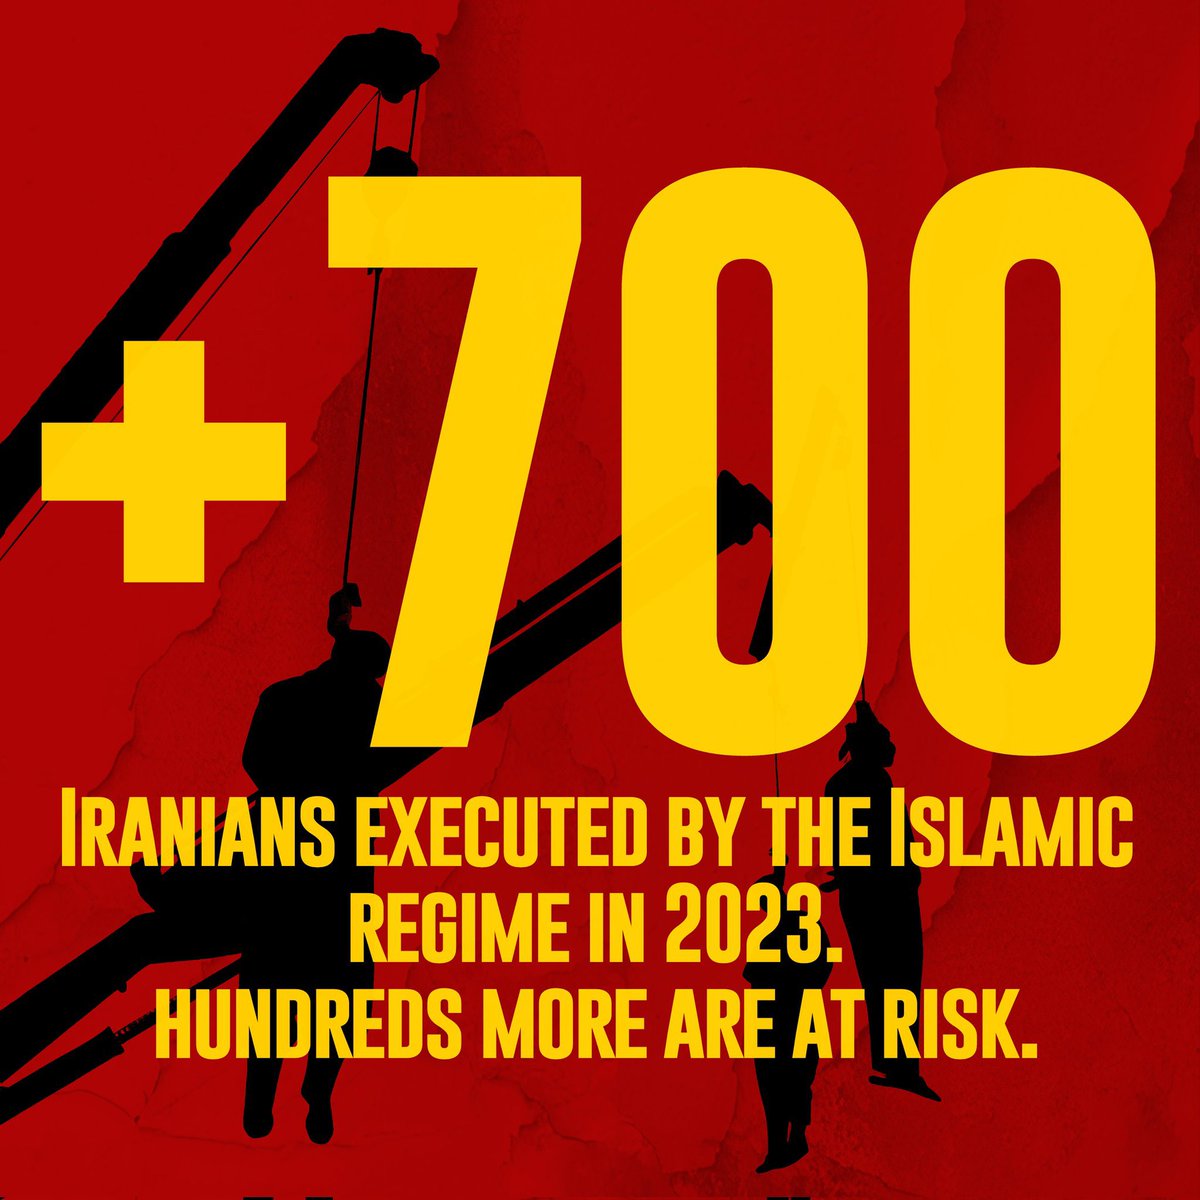 Let’s NOT lose focus.
STOP EXECUTIONS IN IRAN!
#MojahedKourkour 
#RezaRasai 
#MansourDahmardeh 
#FarshidHassanZehi